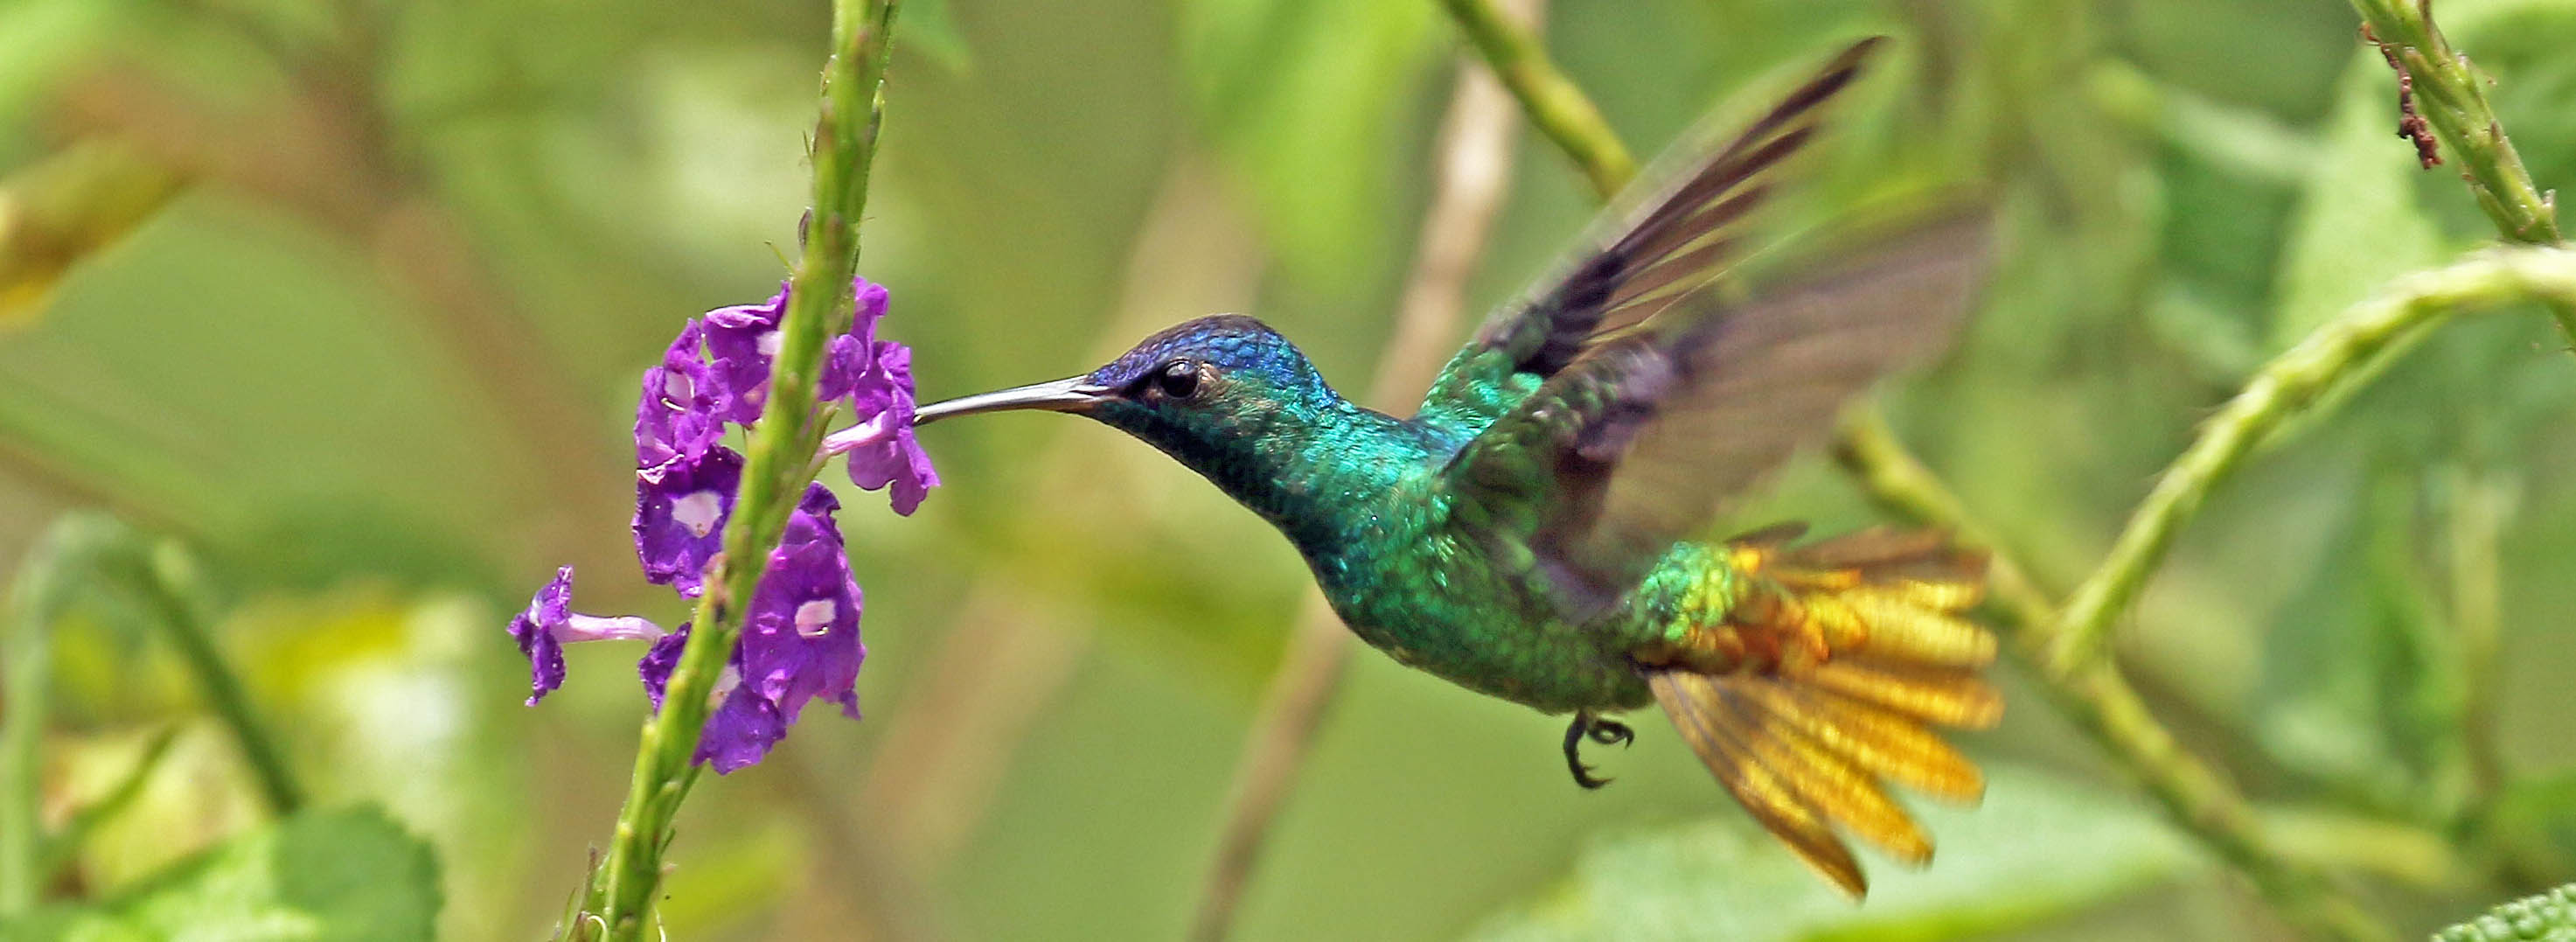 hummingbird-golden-tailed-amazonia-lodge-peru